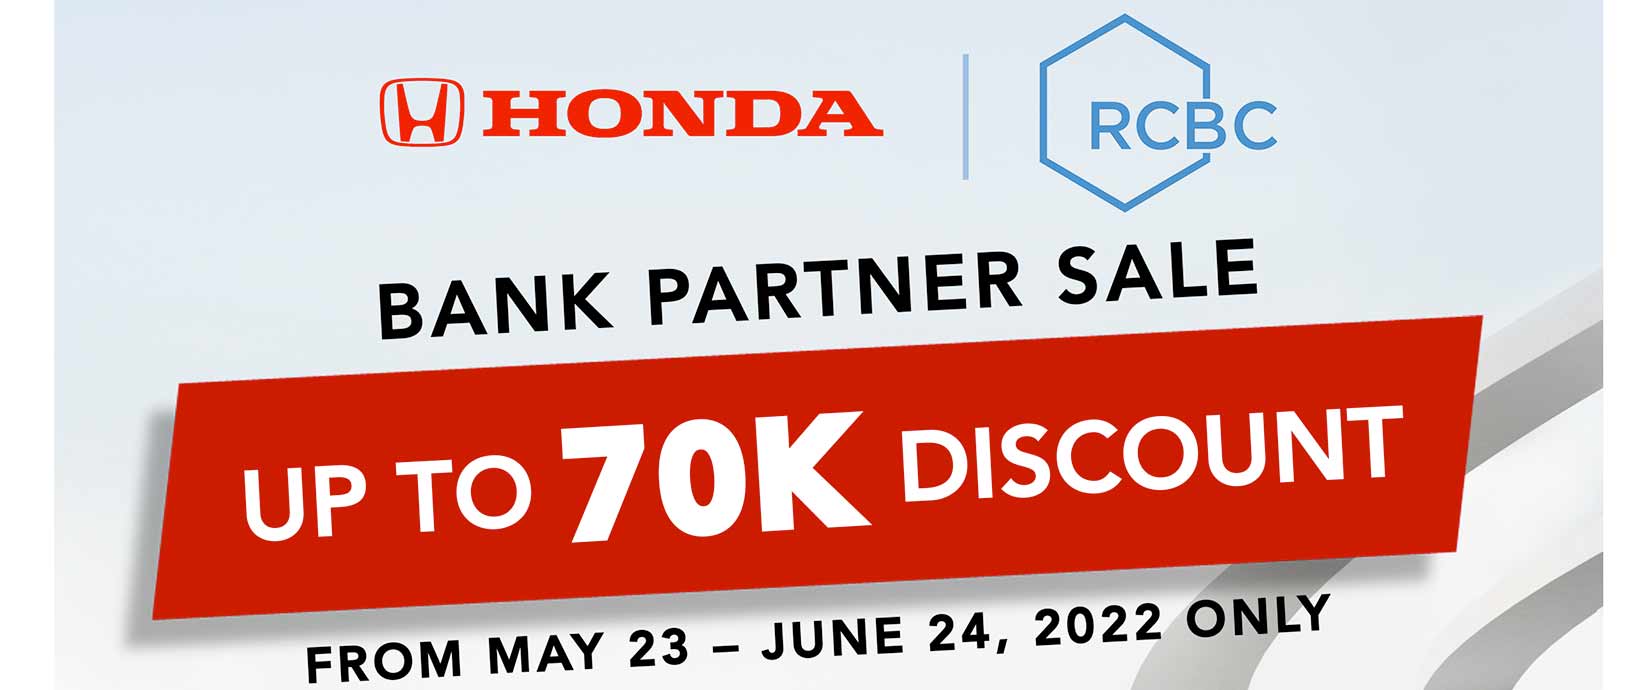 Bank Partner Sale Honda x RCBC